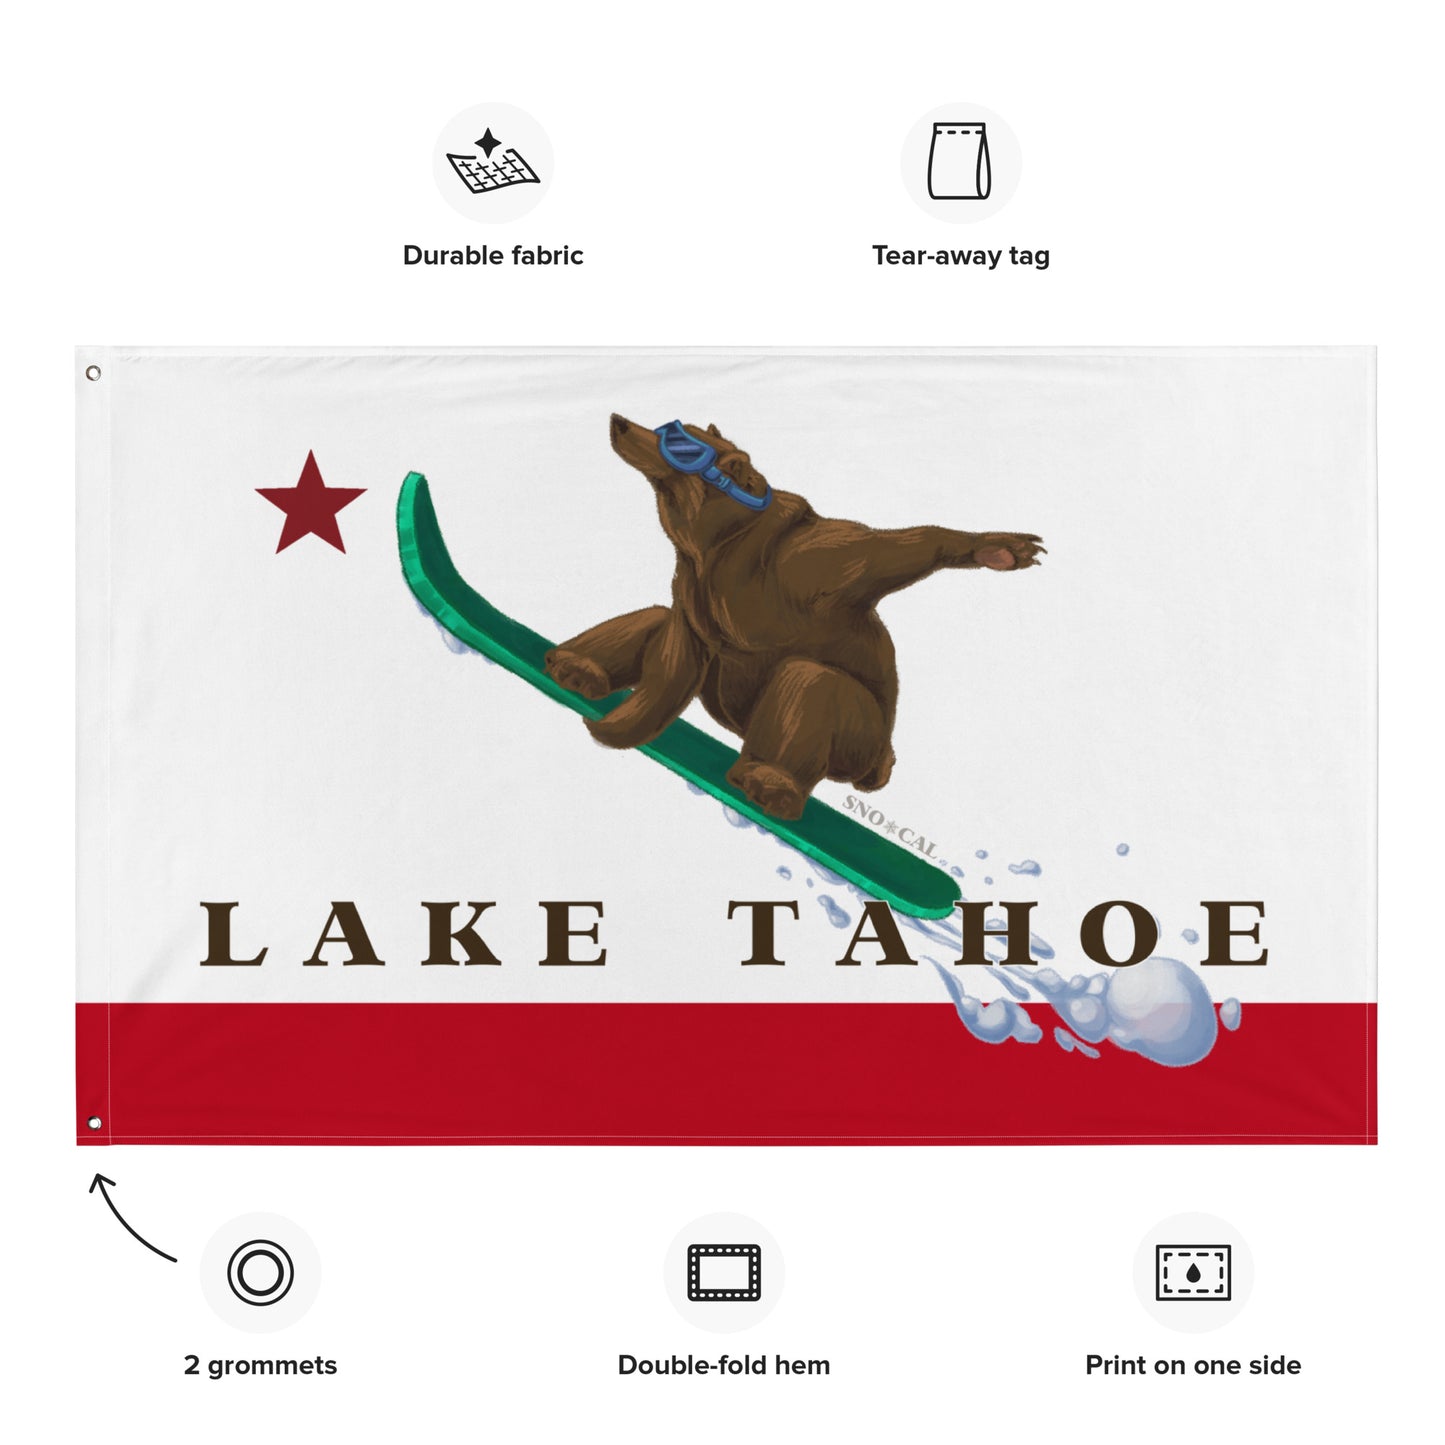 Lake Tahoe CA Snowboard Flag